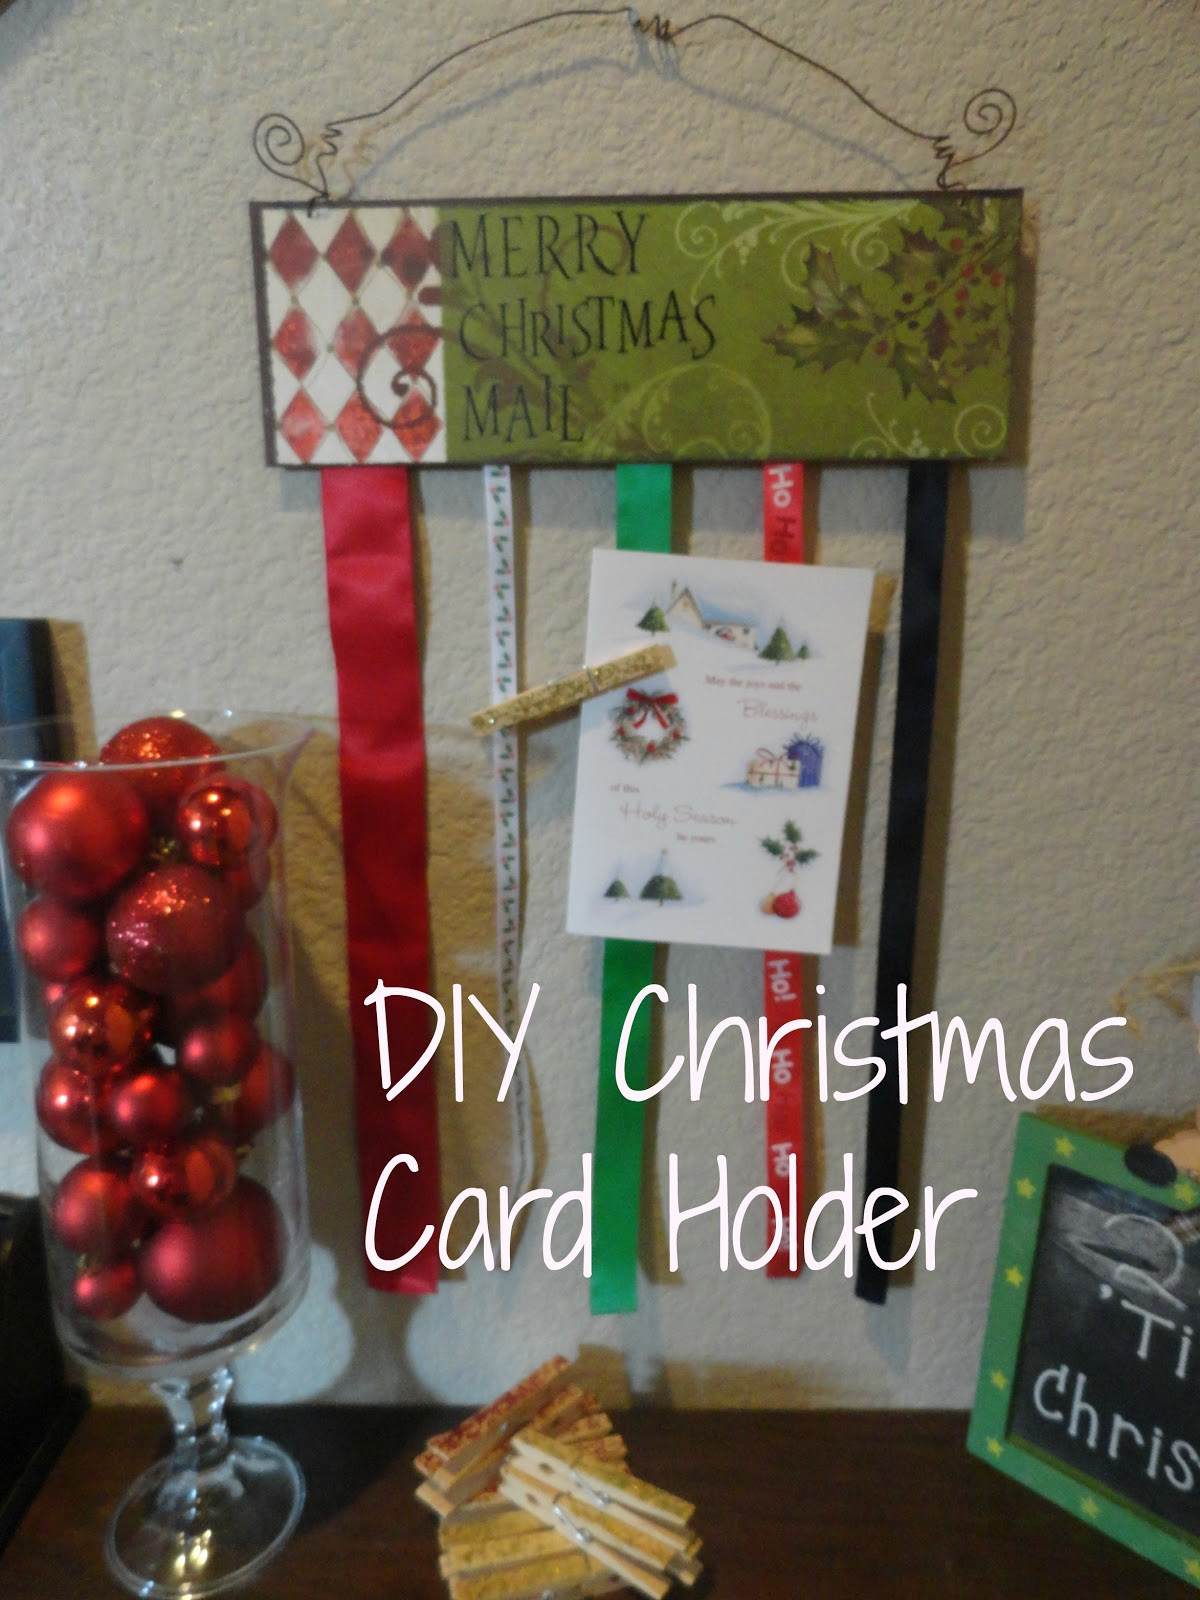 DIY Christmas Card Holder
 So I Saw This Tutorial DIY Christmas Card Holder